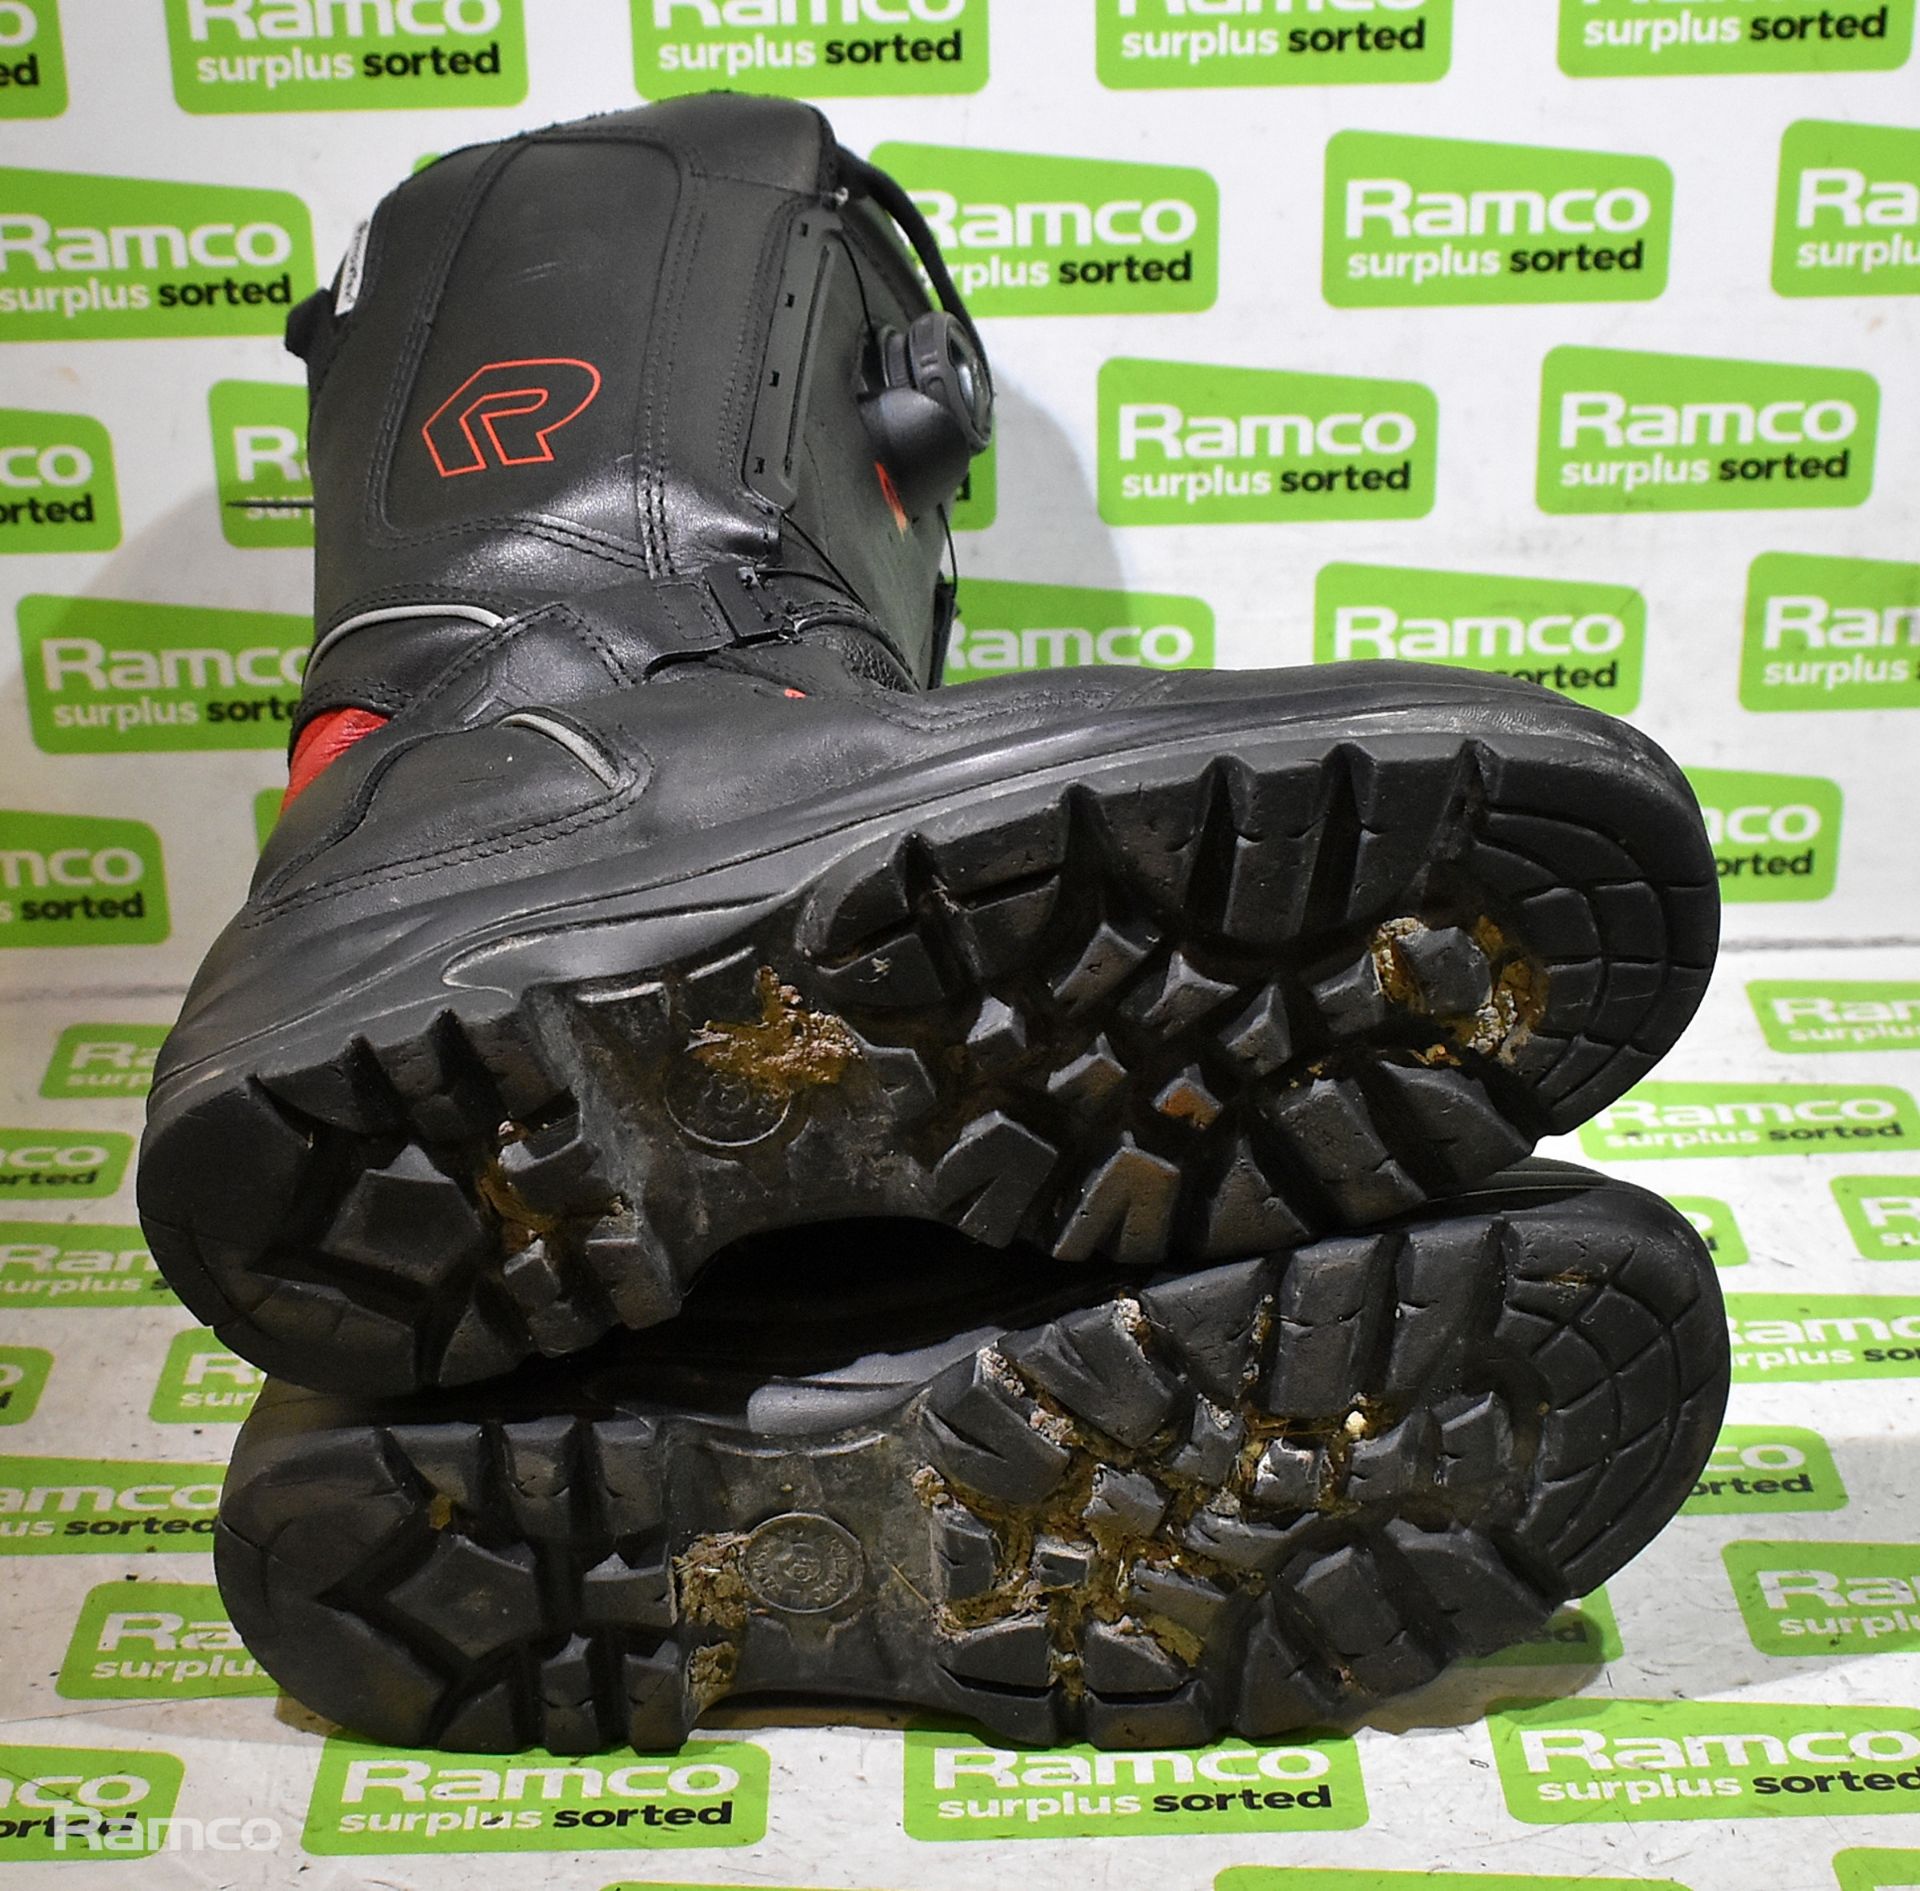 Rosenbauer Sympatex Fire & Heat Resistant Boots Pair - Size: EU 42, UK 8 - Image 5 of 5